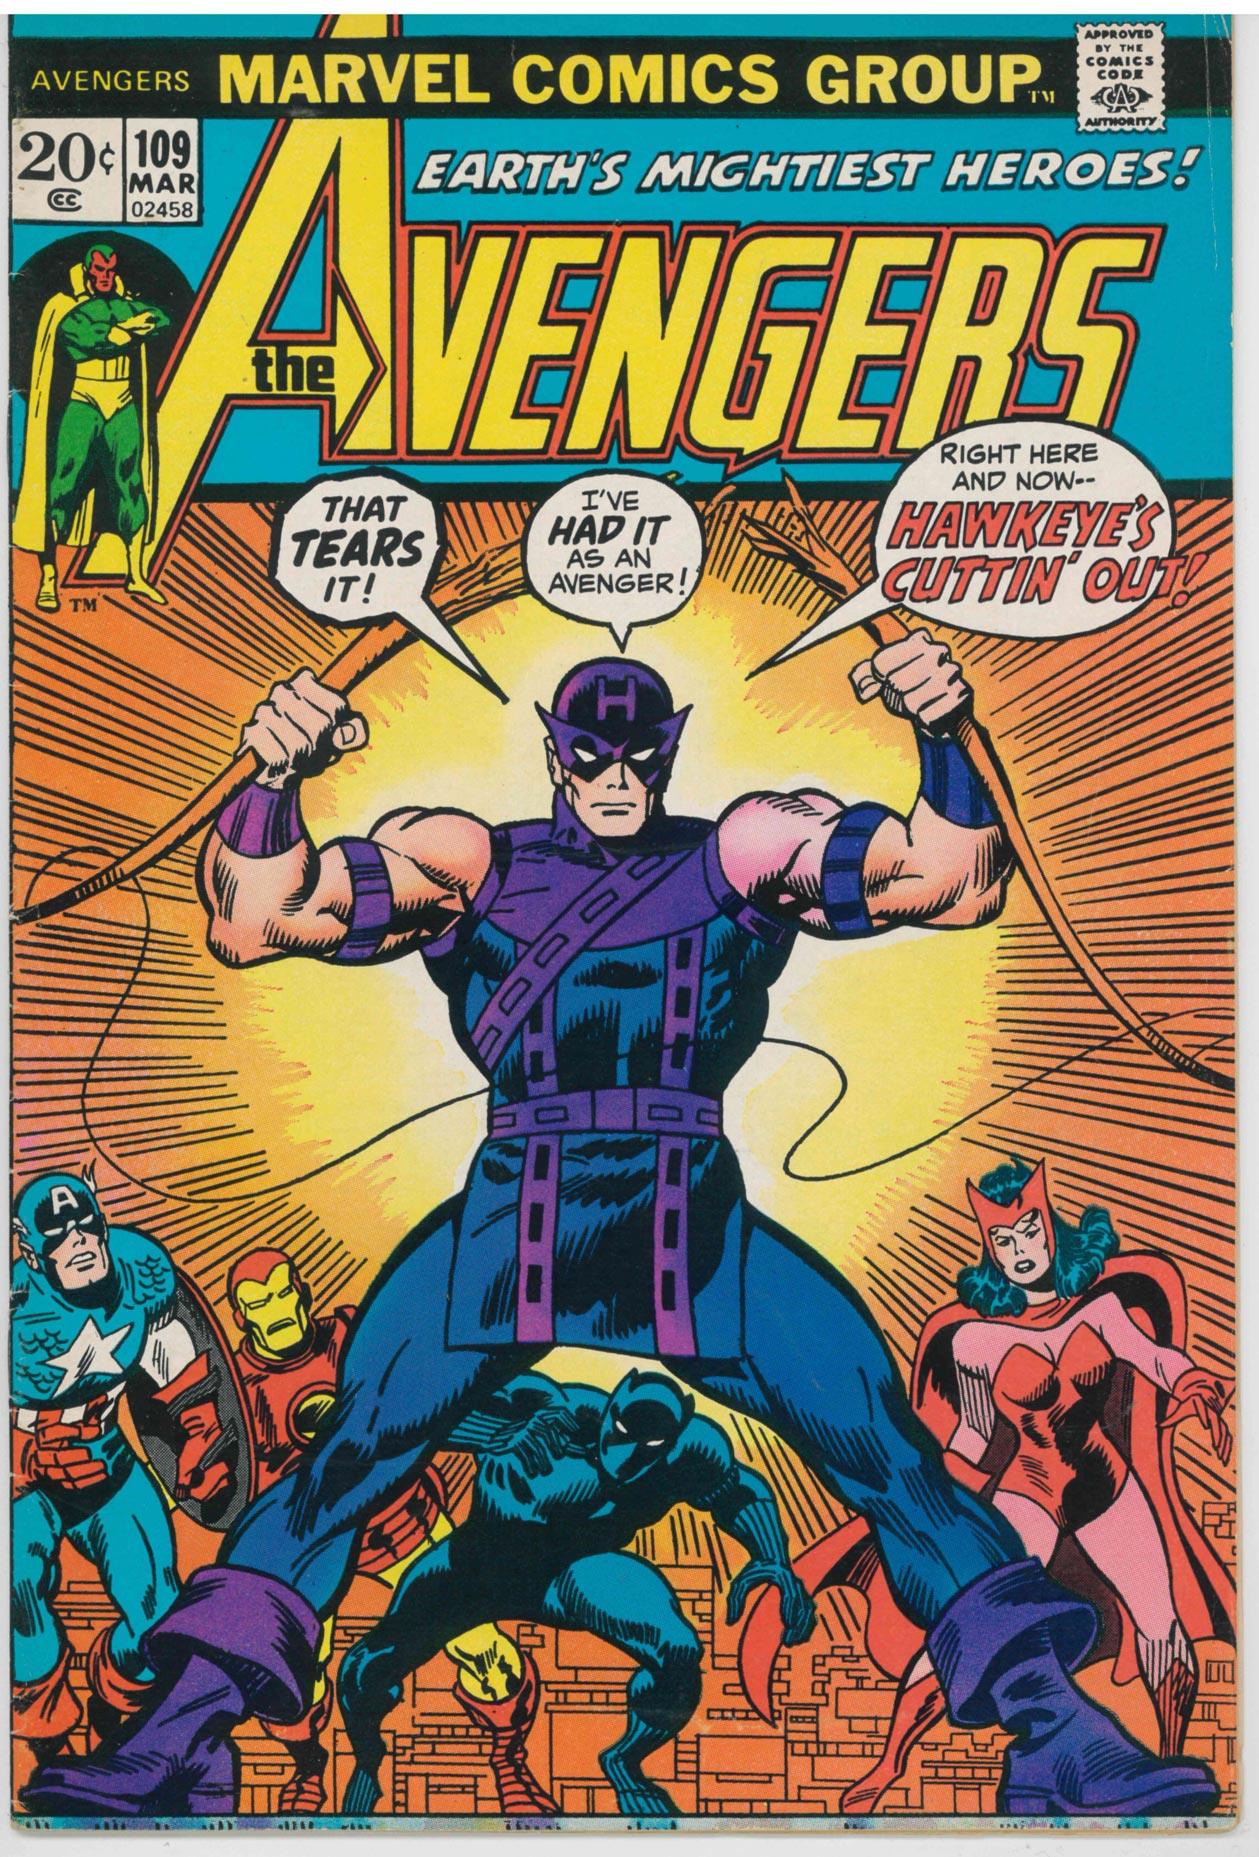 AVENGERS (1963) #109 (FN/VF) - Kings Comics